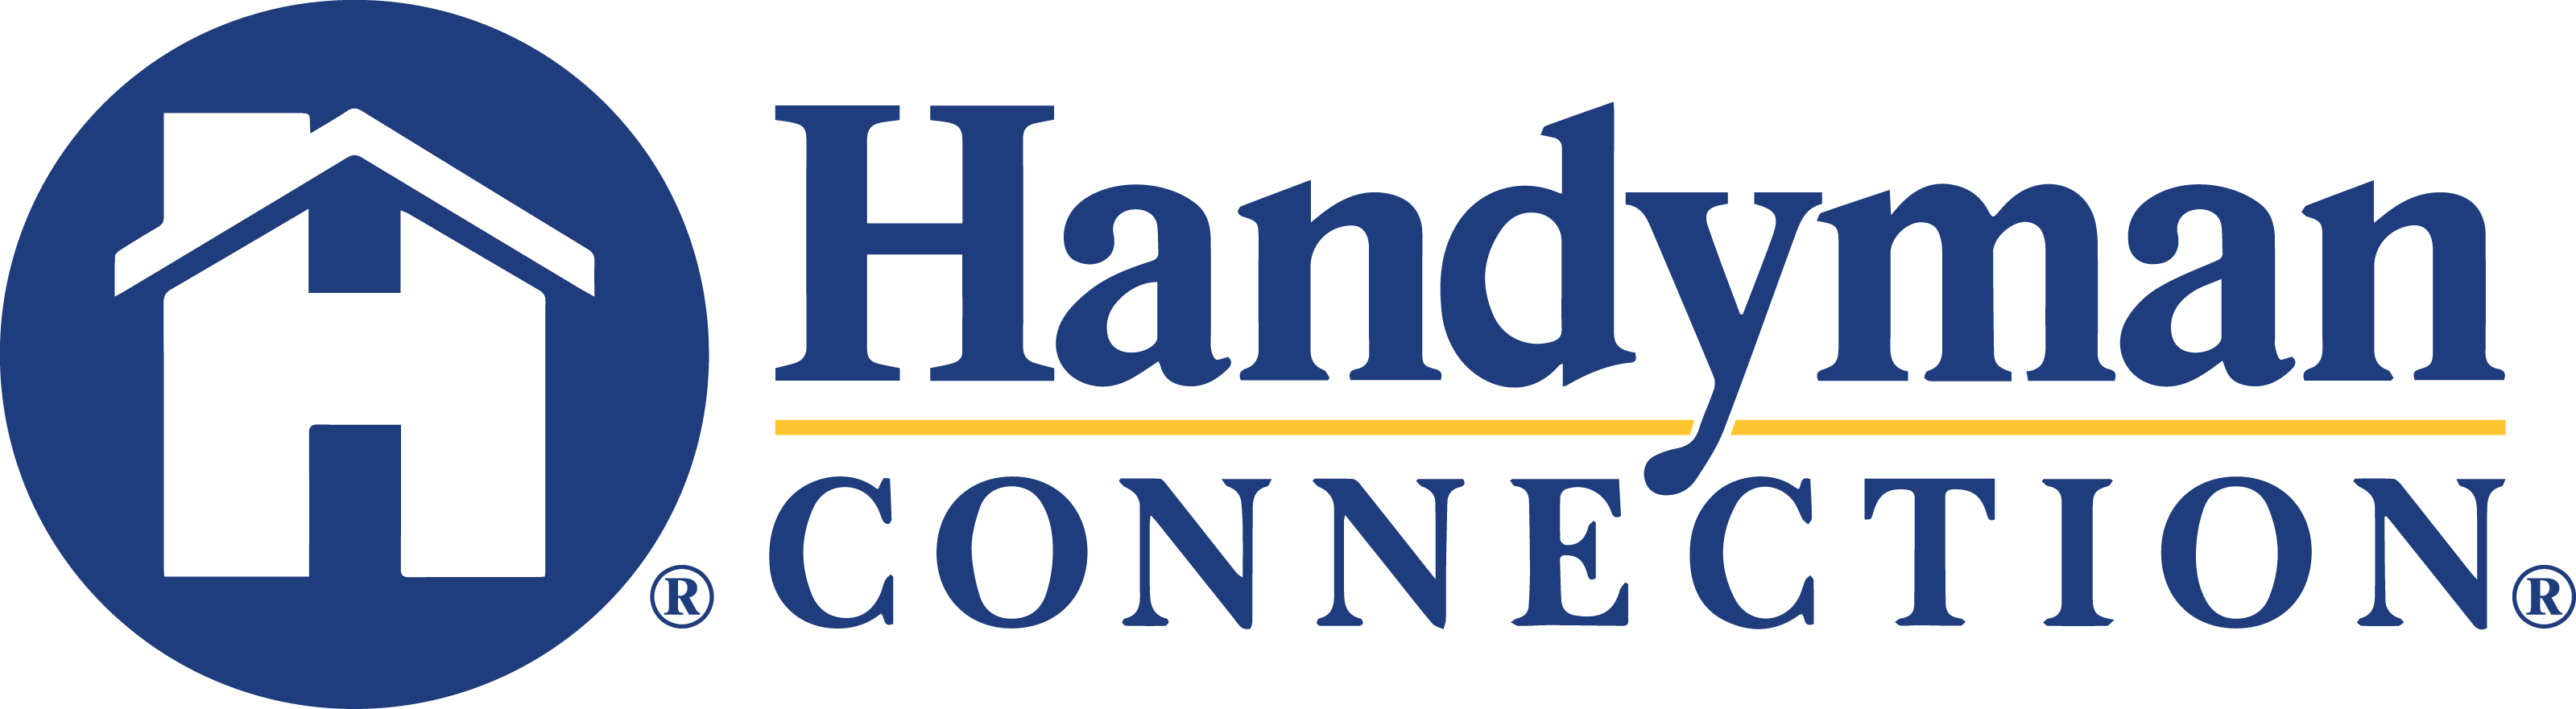 https://handymanconnection.com/austin-westlake/wp-content/uploads/sites/9/2021/05/HandymanConnection-logo-2-1.png